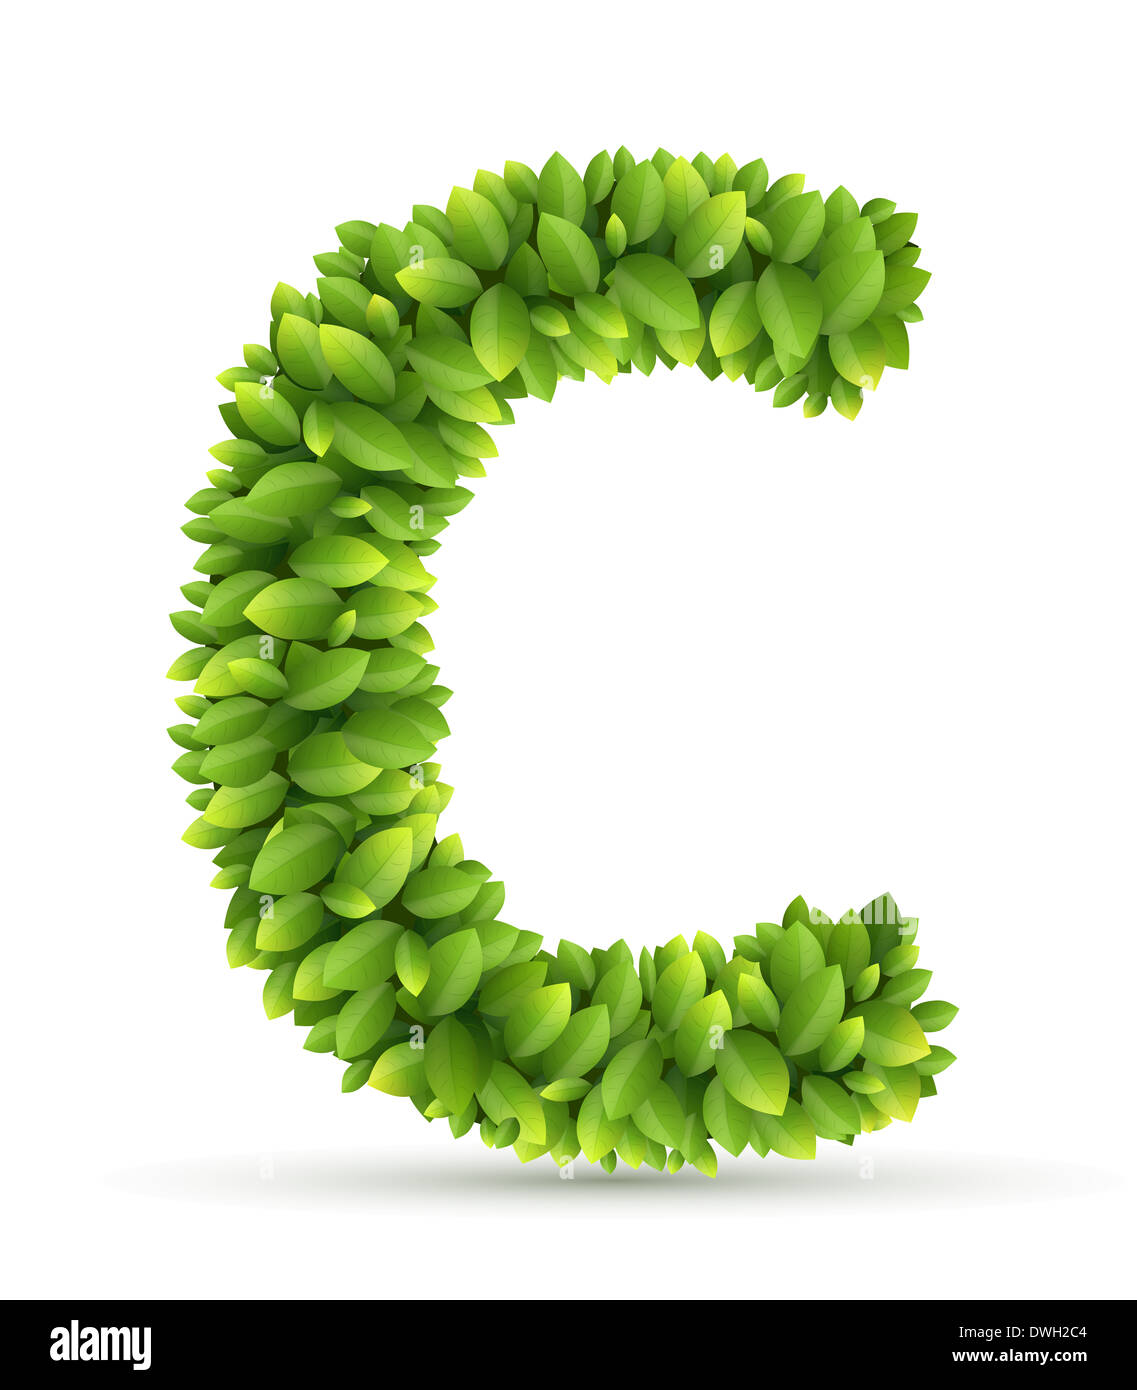 https://c8.alamy.com/comp/DWH2C4/letter-c-vector-alphabet-of-green-leaves-DWH2C4.jpg